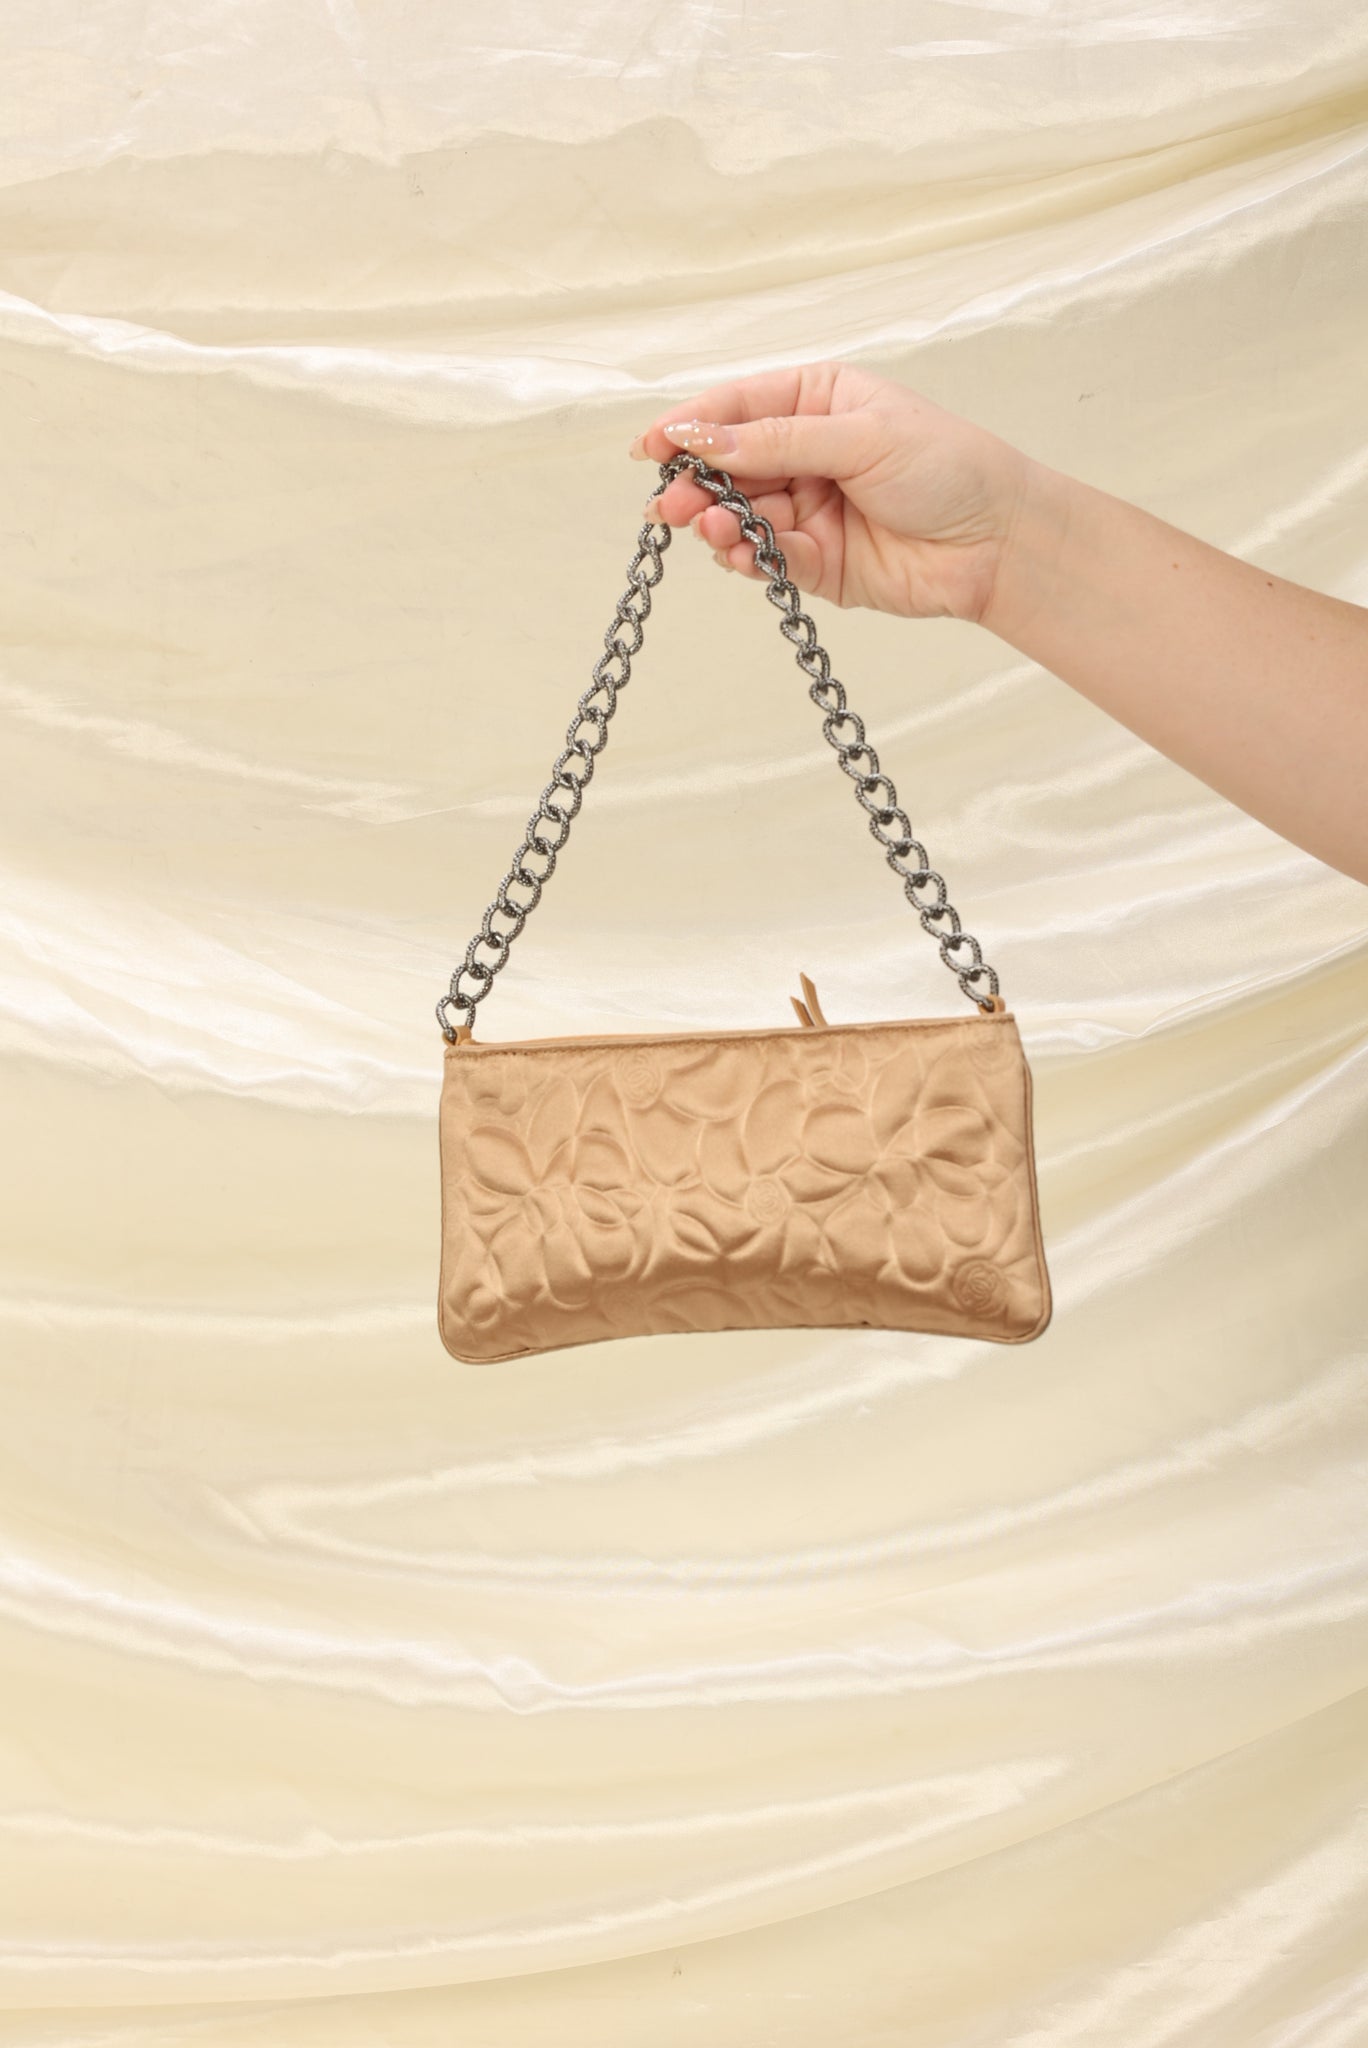 Chanel Camellia Handbag Bag Clutch W/ Detachable Chain